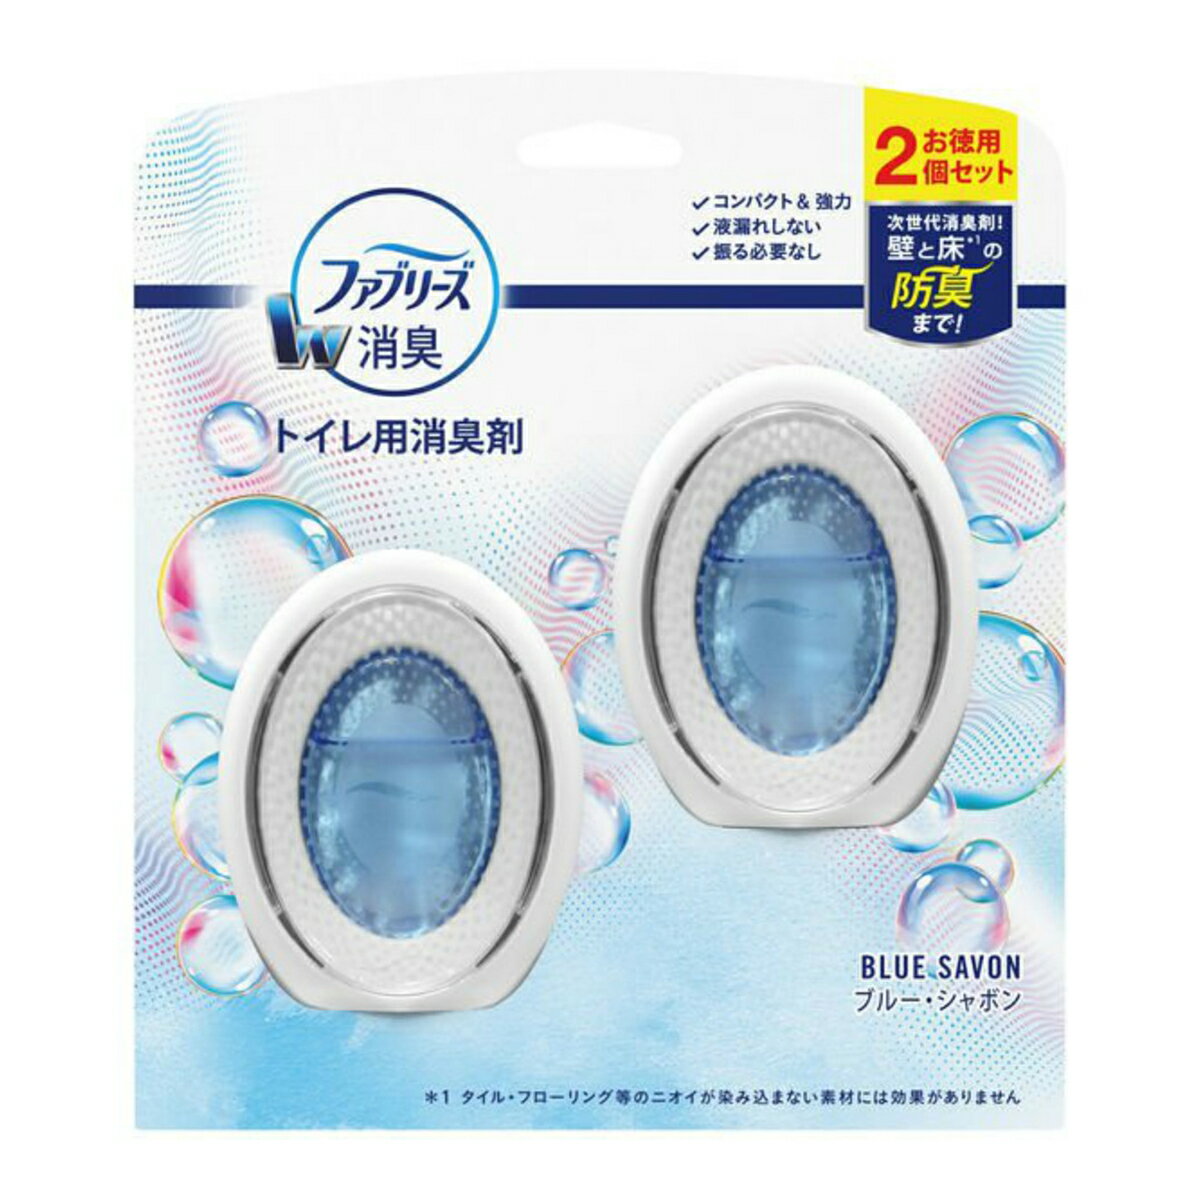 P&G ファブリーズ W消臭 トイレ用消臭剤 ブルー・シャボン 2個入×1パック